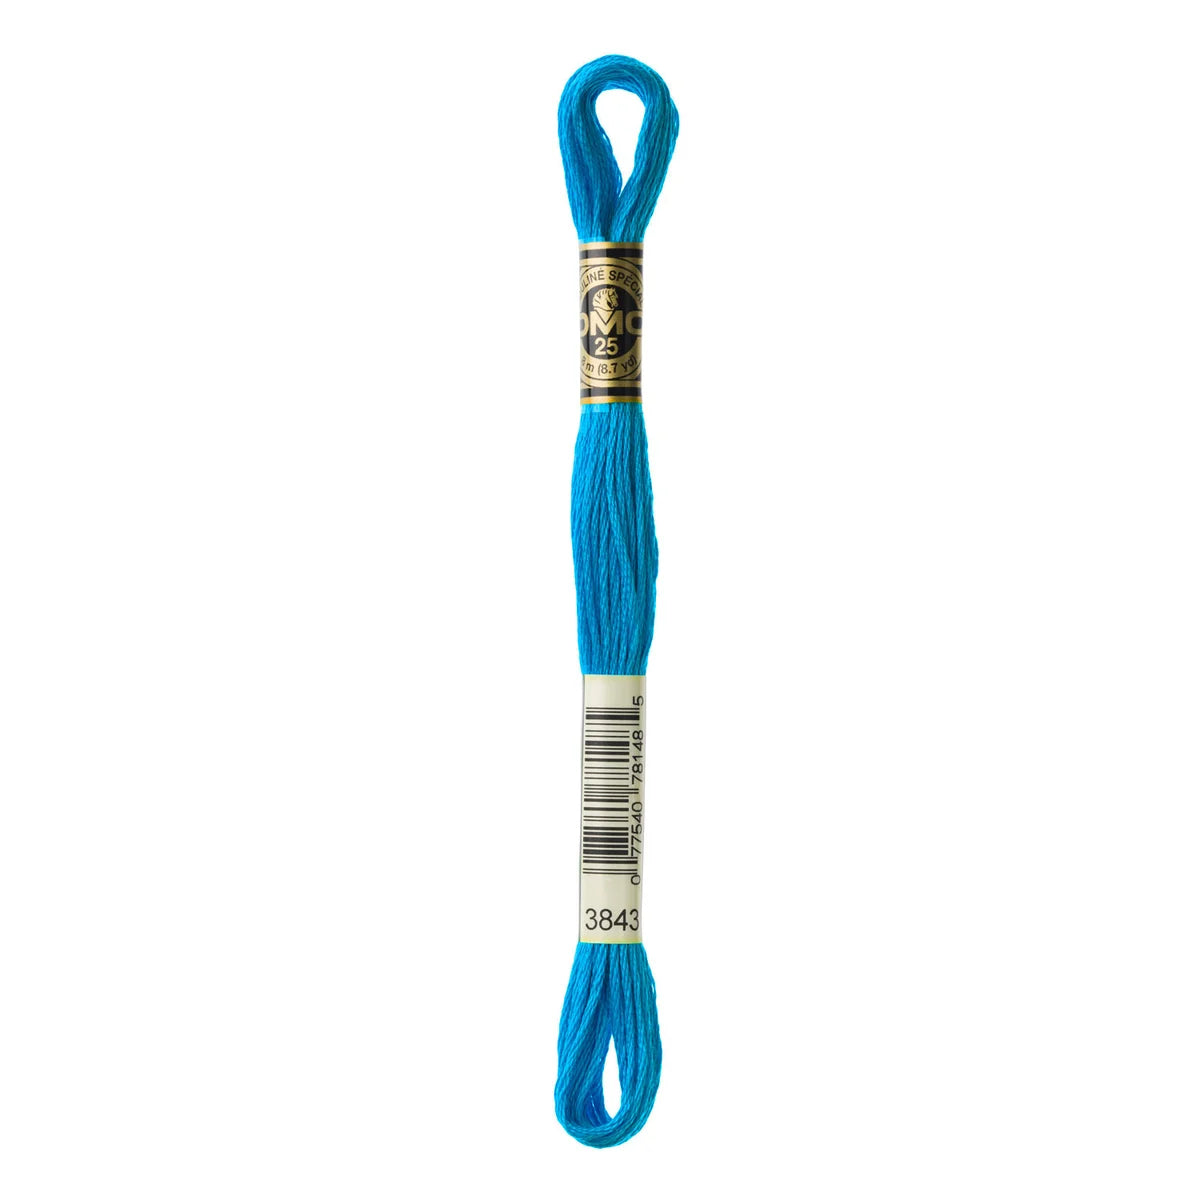 DMC 3843 - Electric Blue - DMC 6 Strand Embroidery Thread, Thread & Floss, Thread & Floss, The Crafty Grimalkin - A Cross Stitch Store